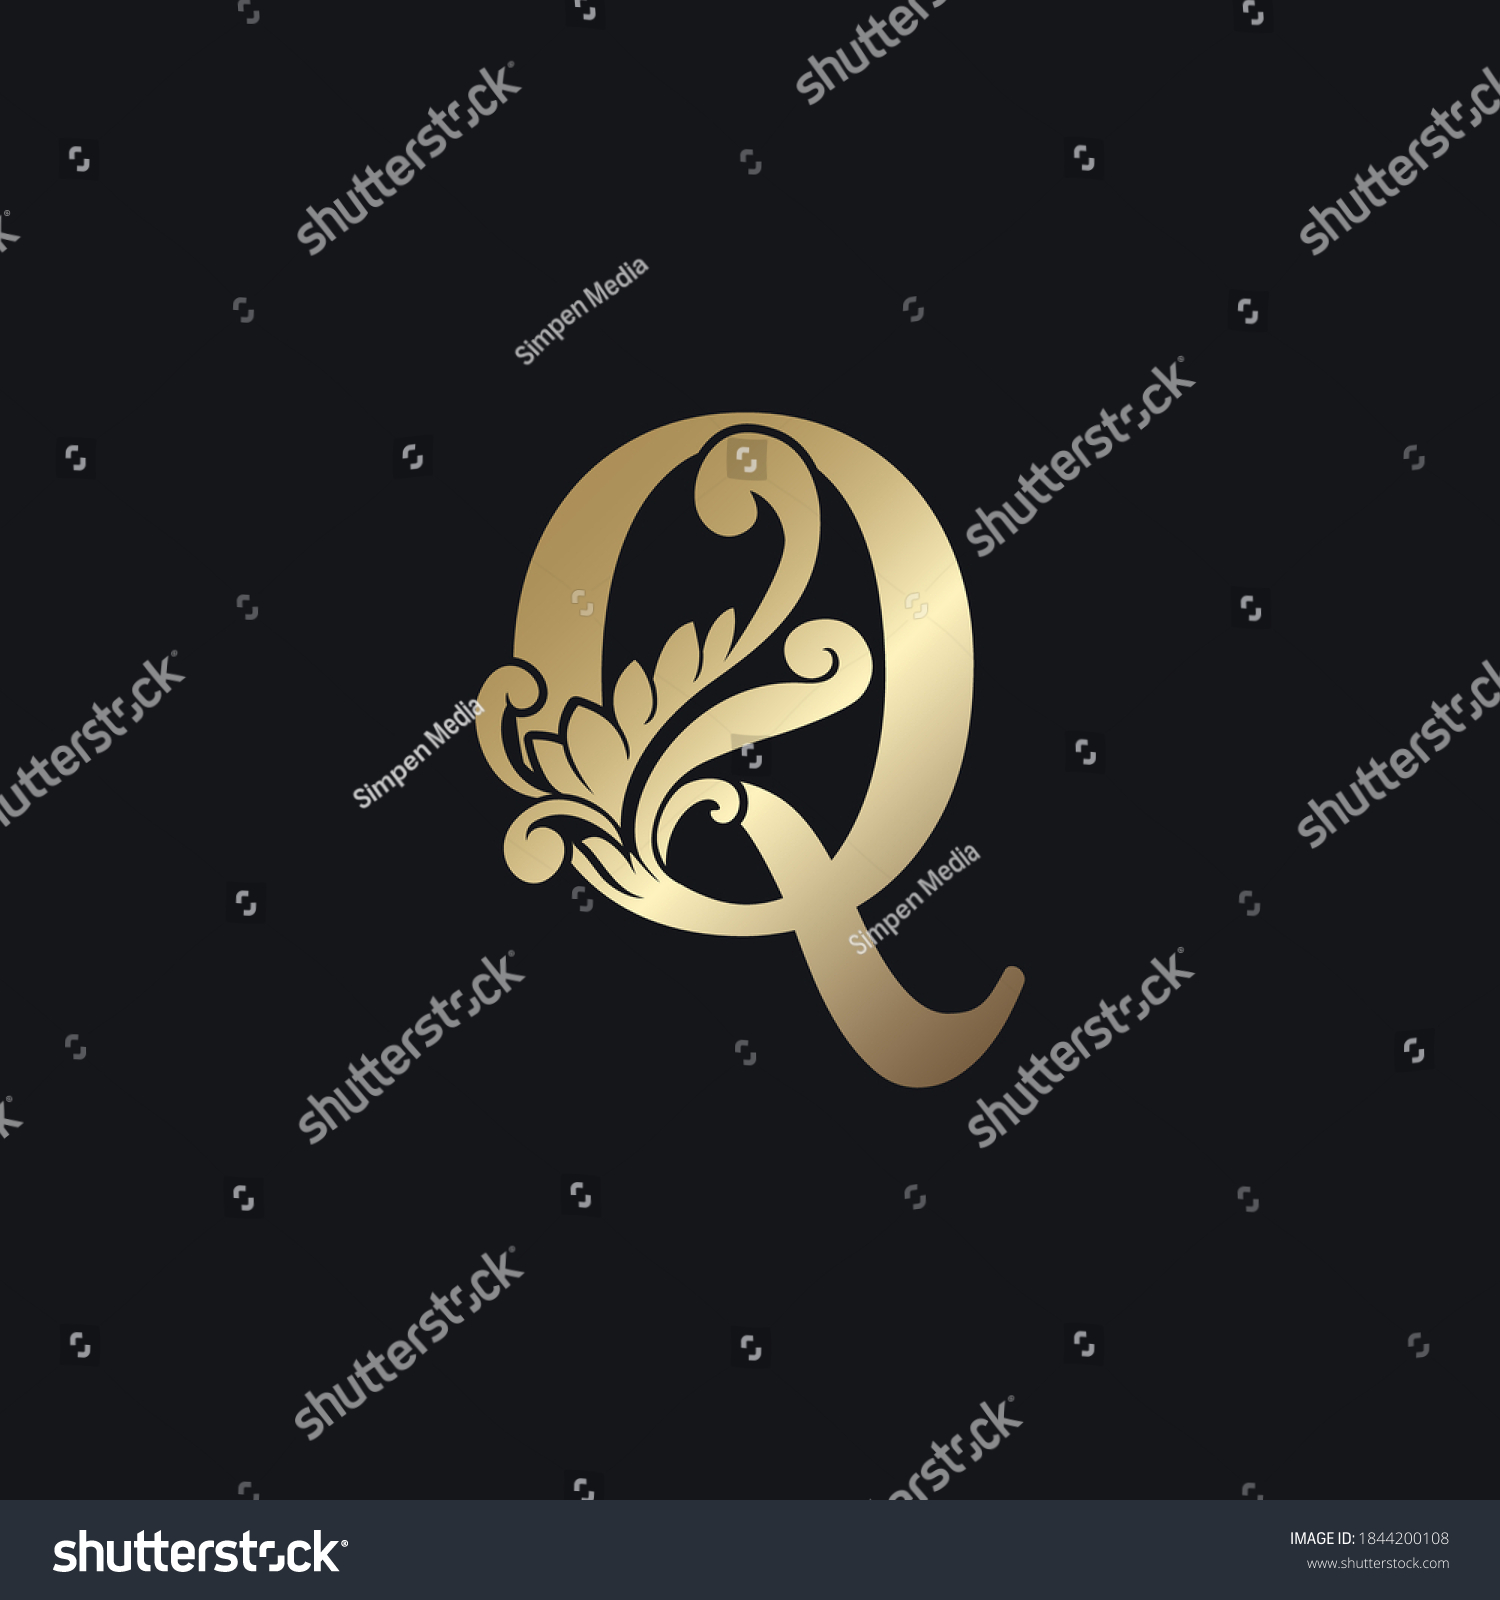 SVG of Classy Gold Letter Q Luxury Decorative Initial Logo Icon, Elegance Swirl Ornate Deco  Logo Vintage Template Design svg